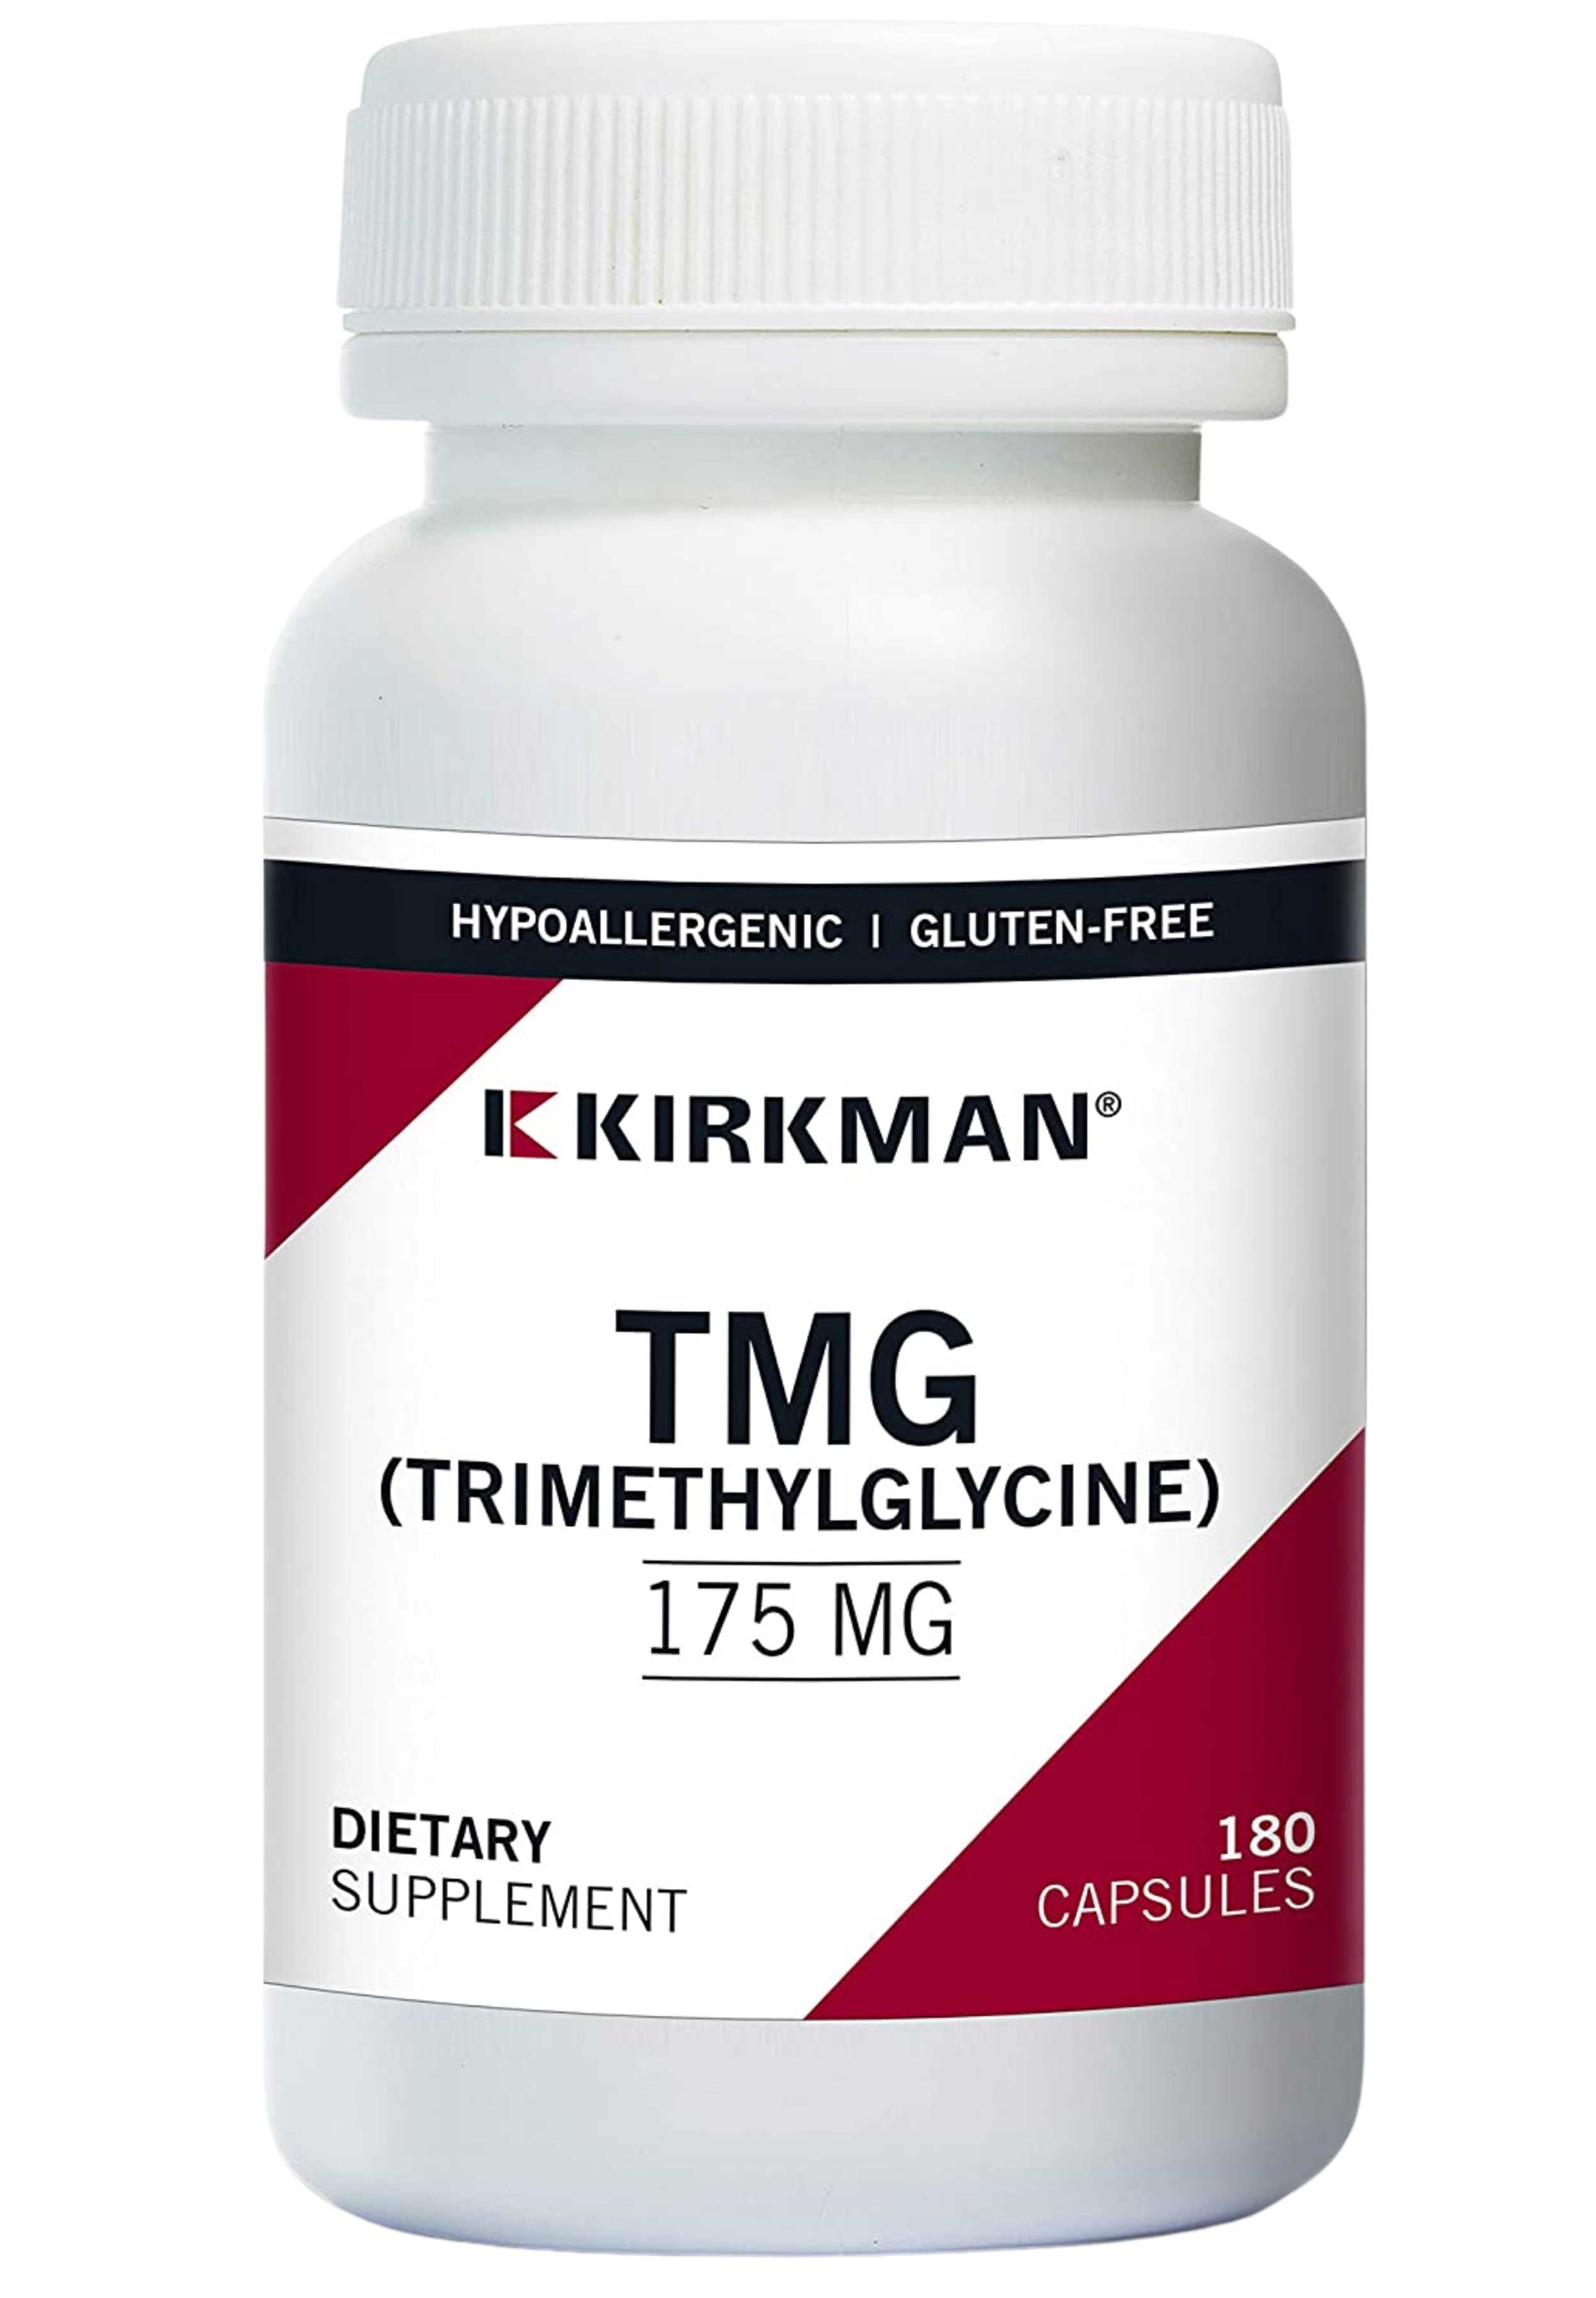 Kirkman TMG (Trimethylglycine) 175 mg